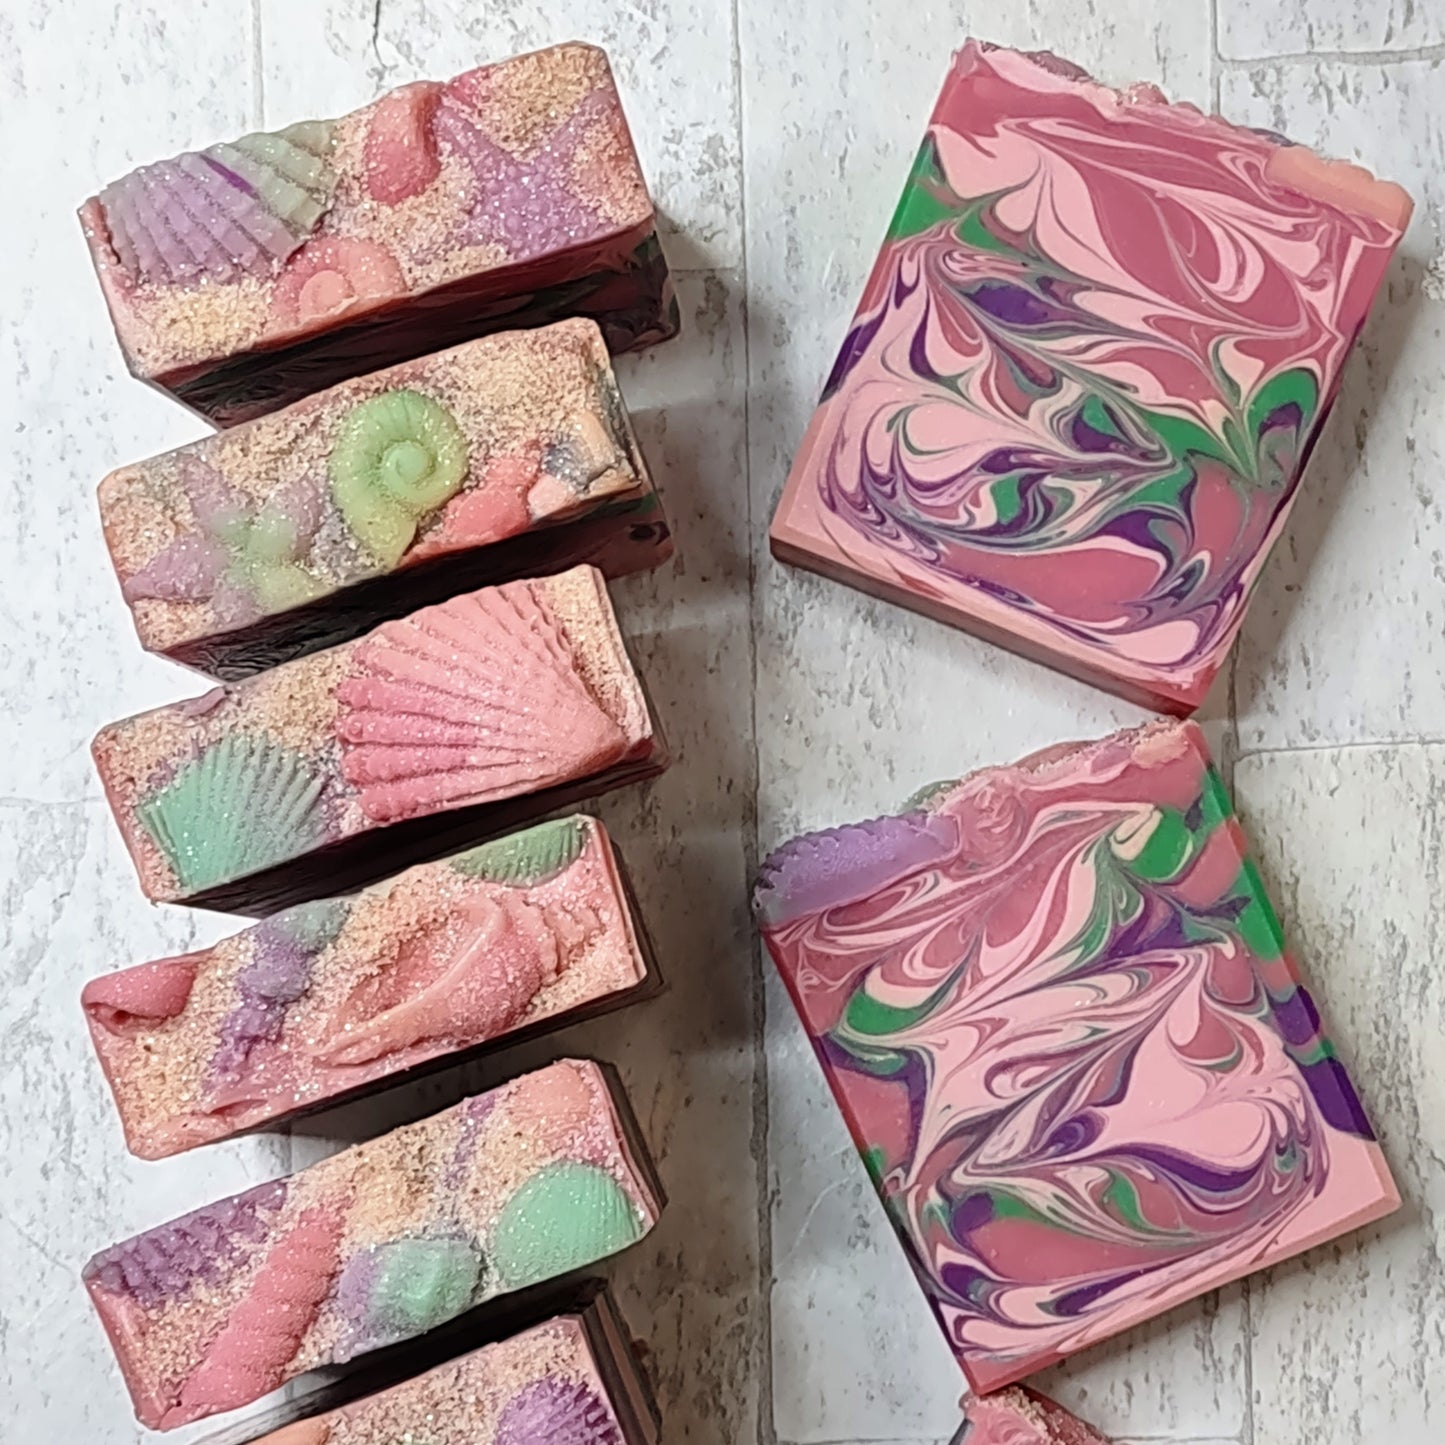 Seven Bars of Patrick Strawberry Artisan Soap